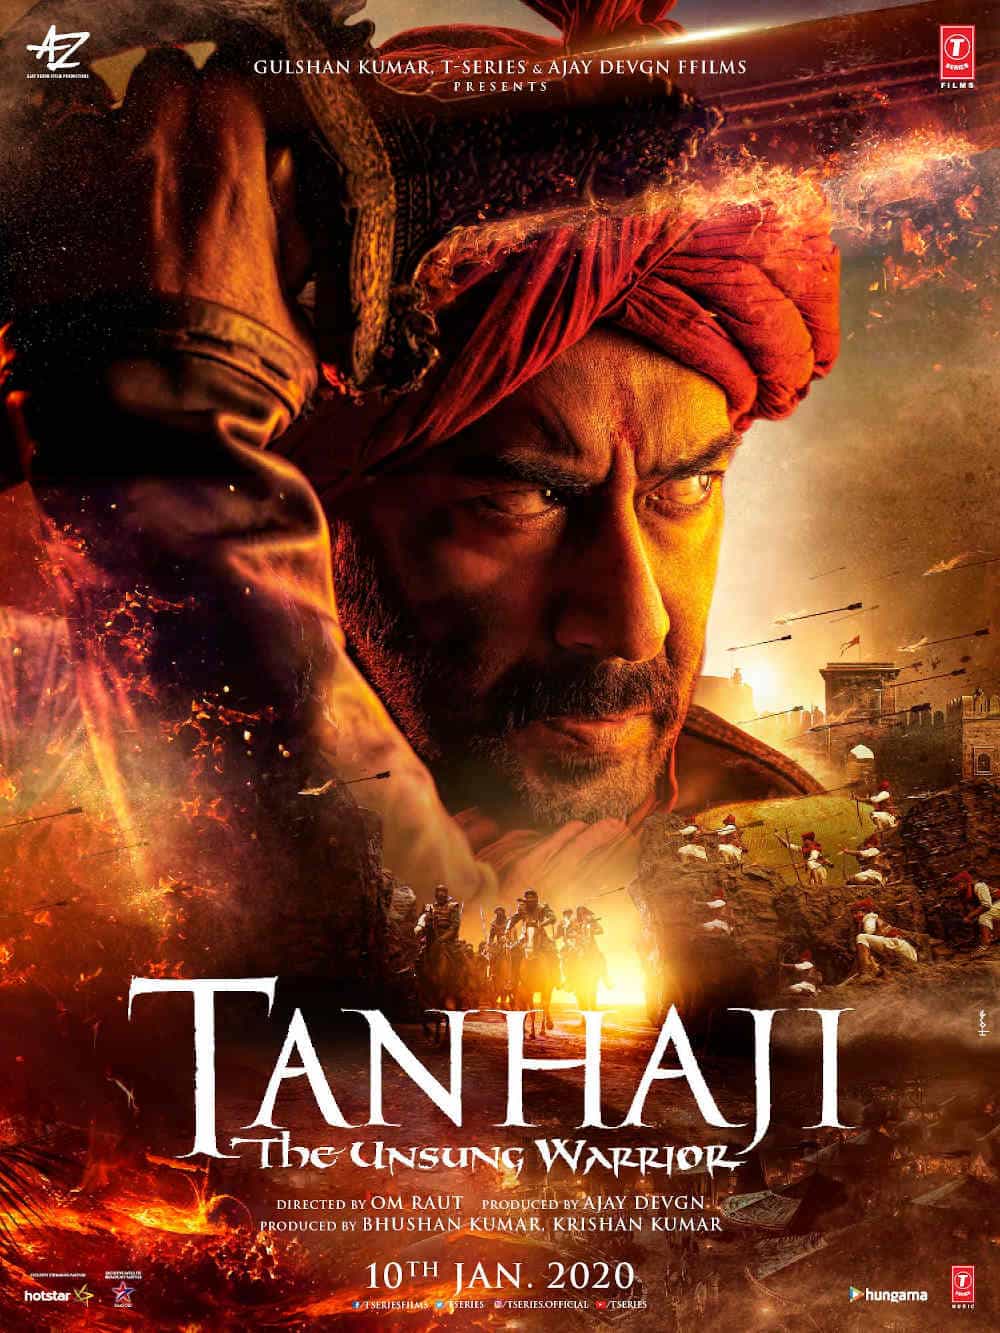 Tanhaji: The Unsung Warrior